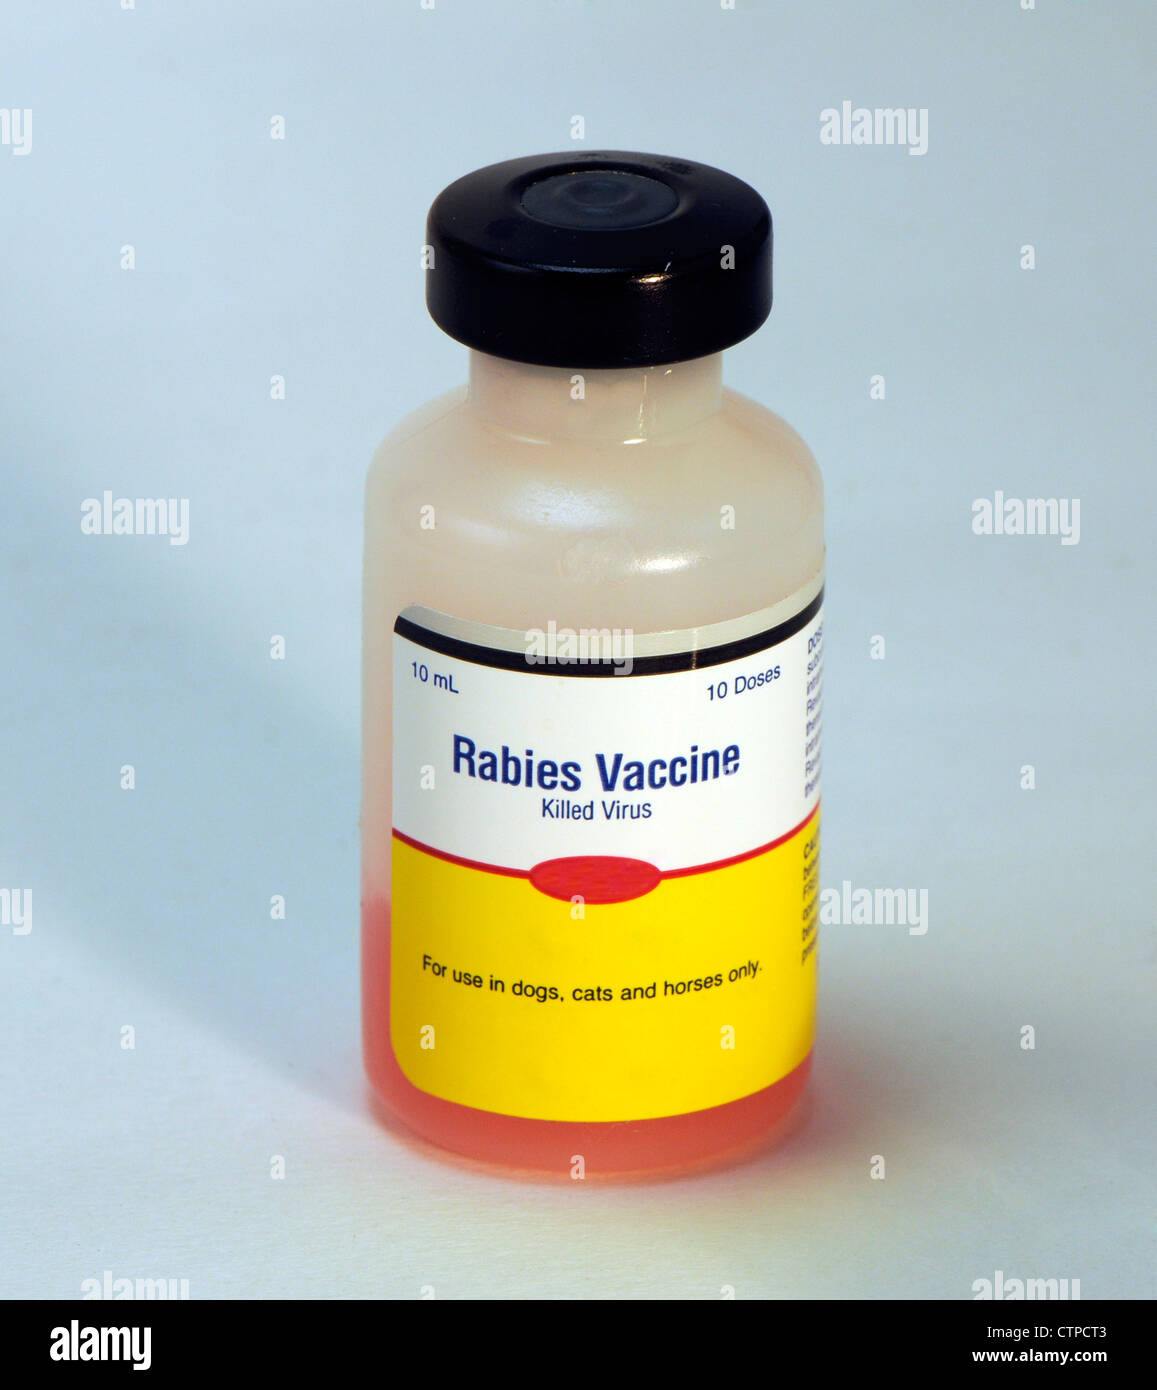 Rabies vaccine vial Stock Photo